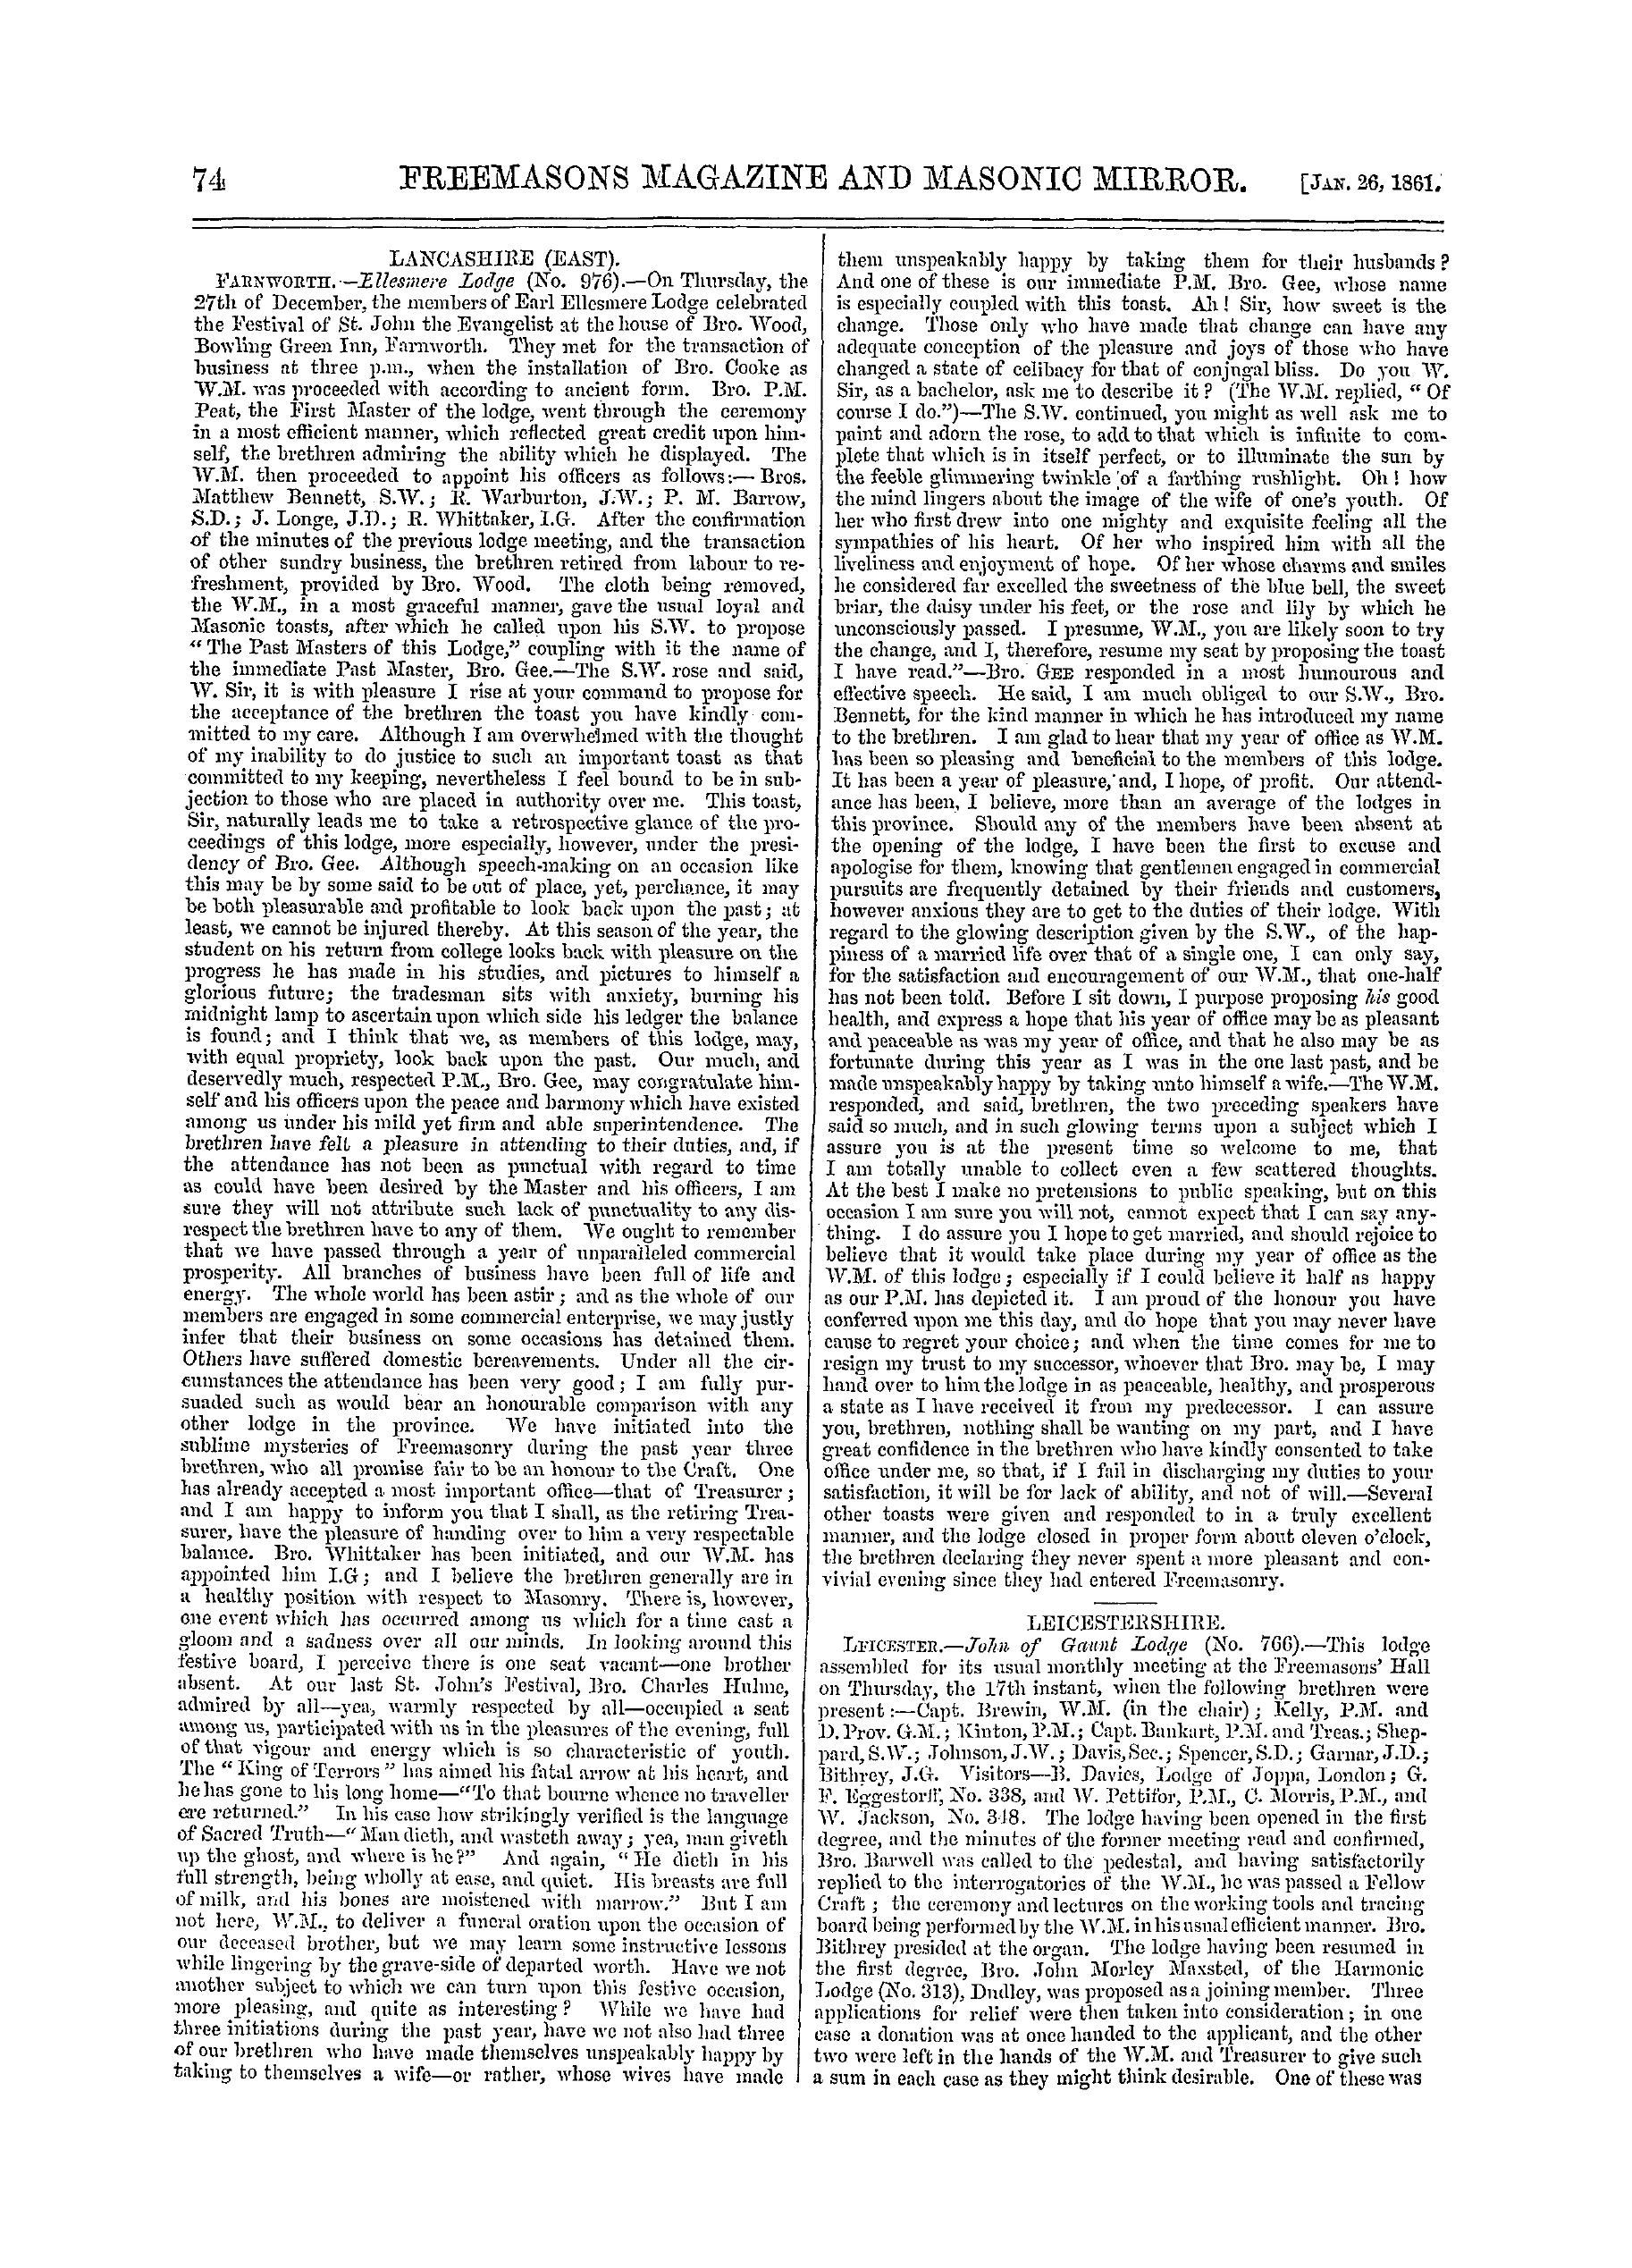 The Freemasons' Monthly Magazine: 1861-01-26 - Provincial.